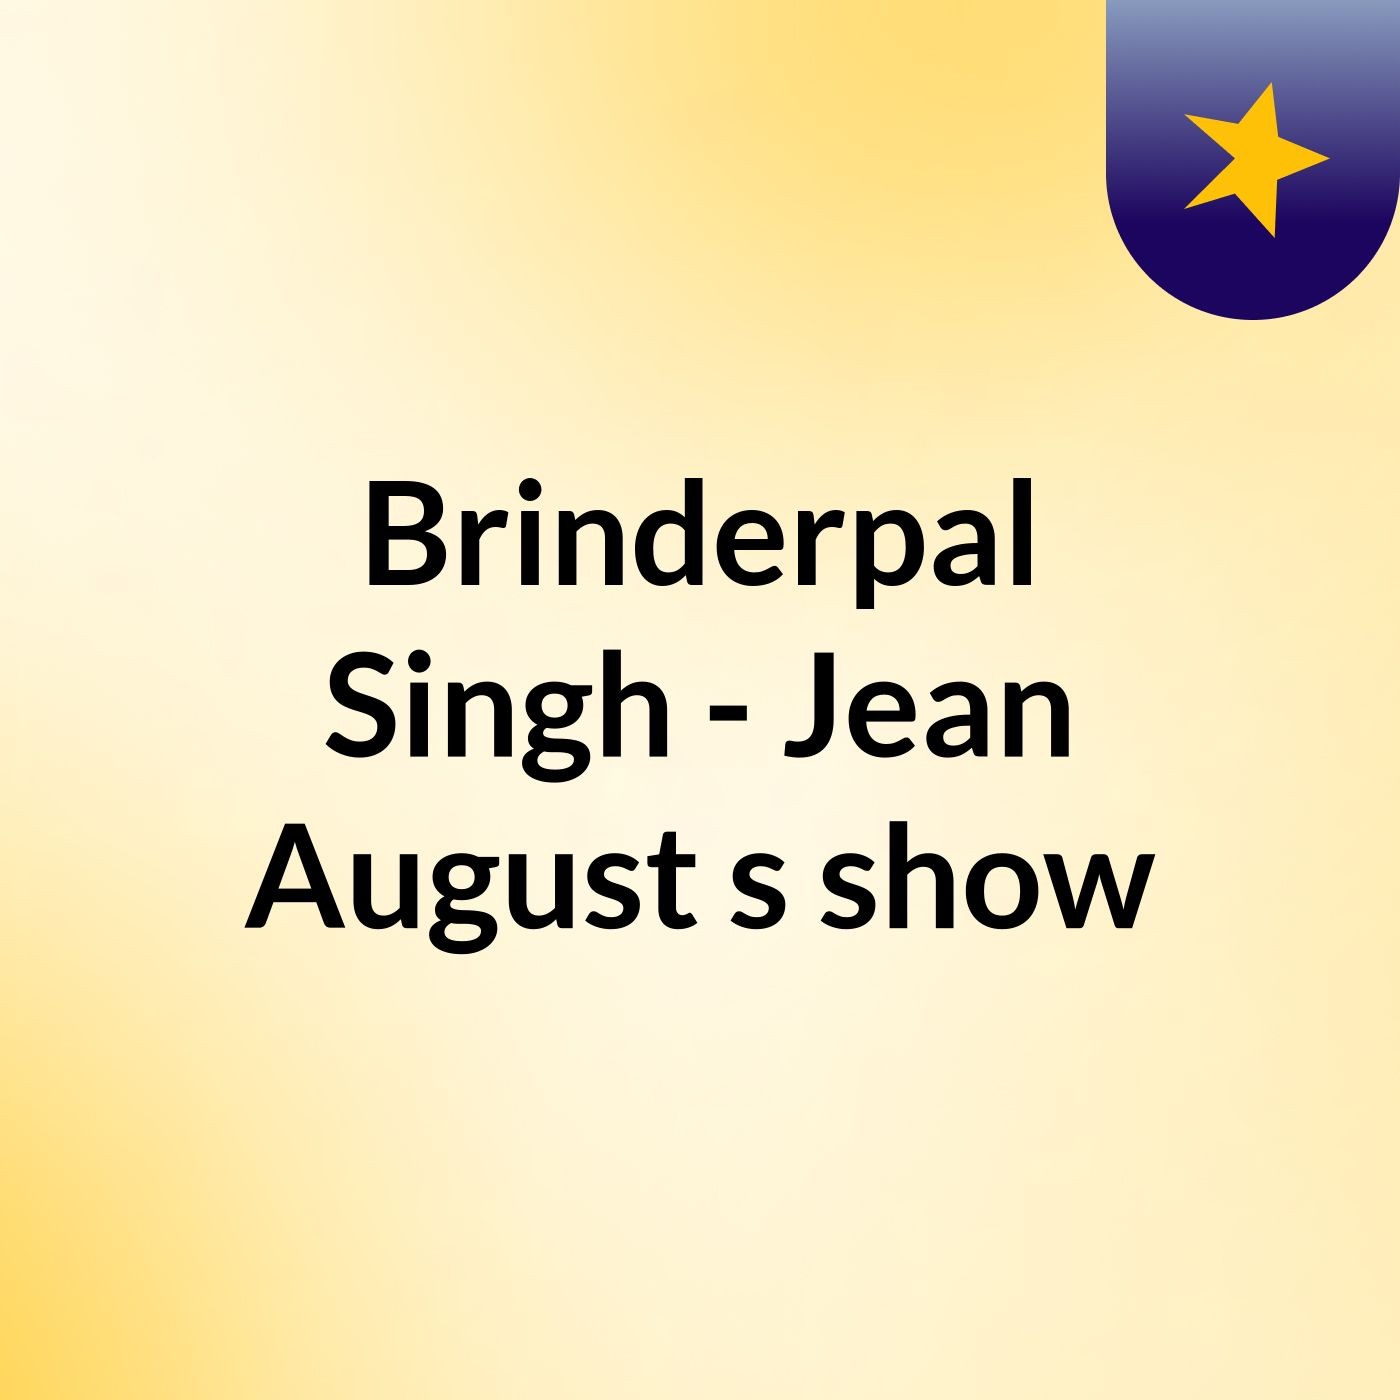 Brinderpal Singh - Jean August's show